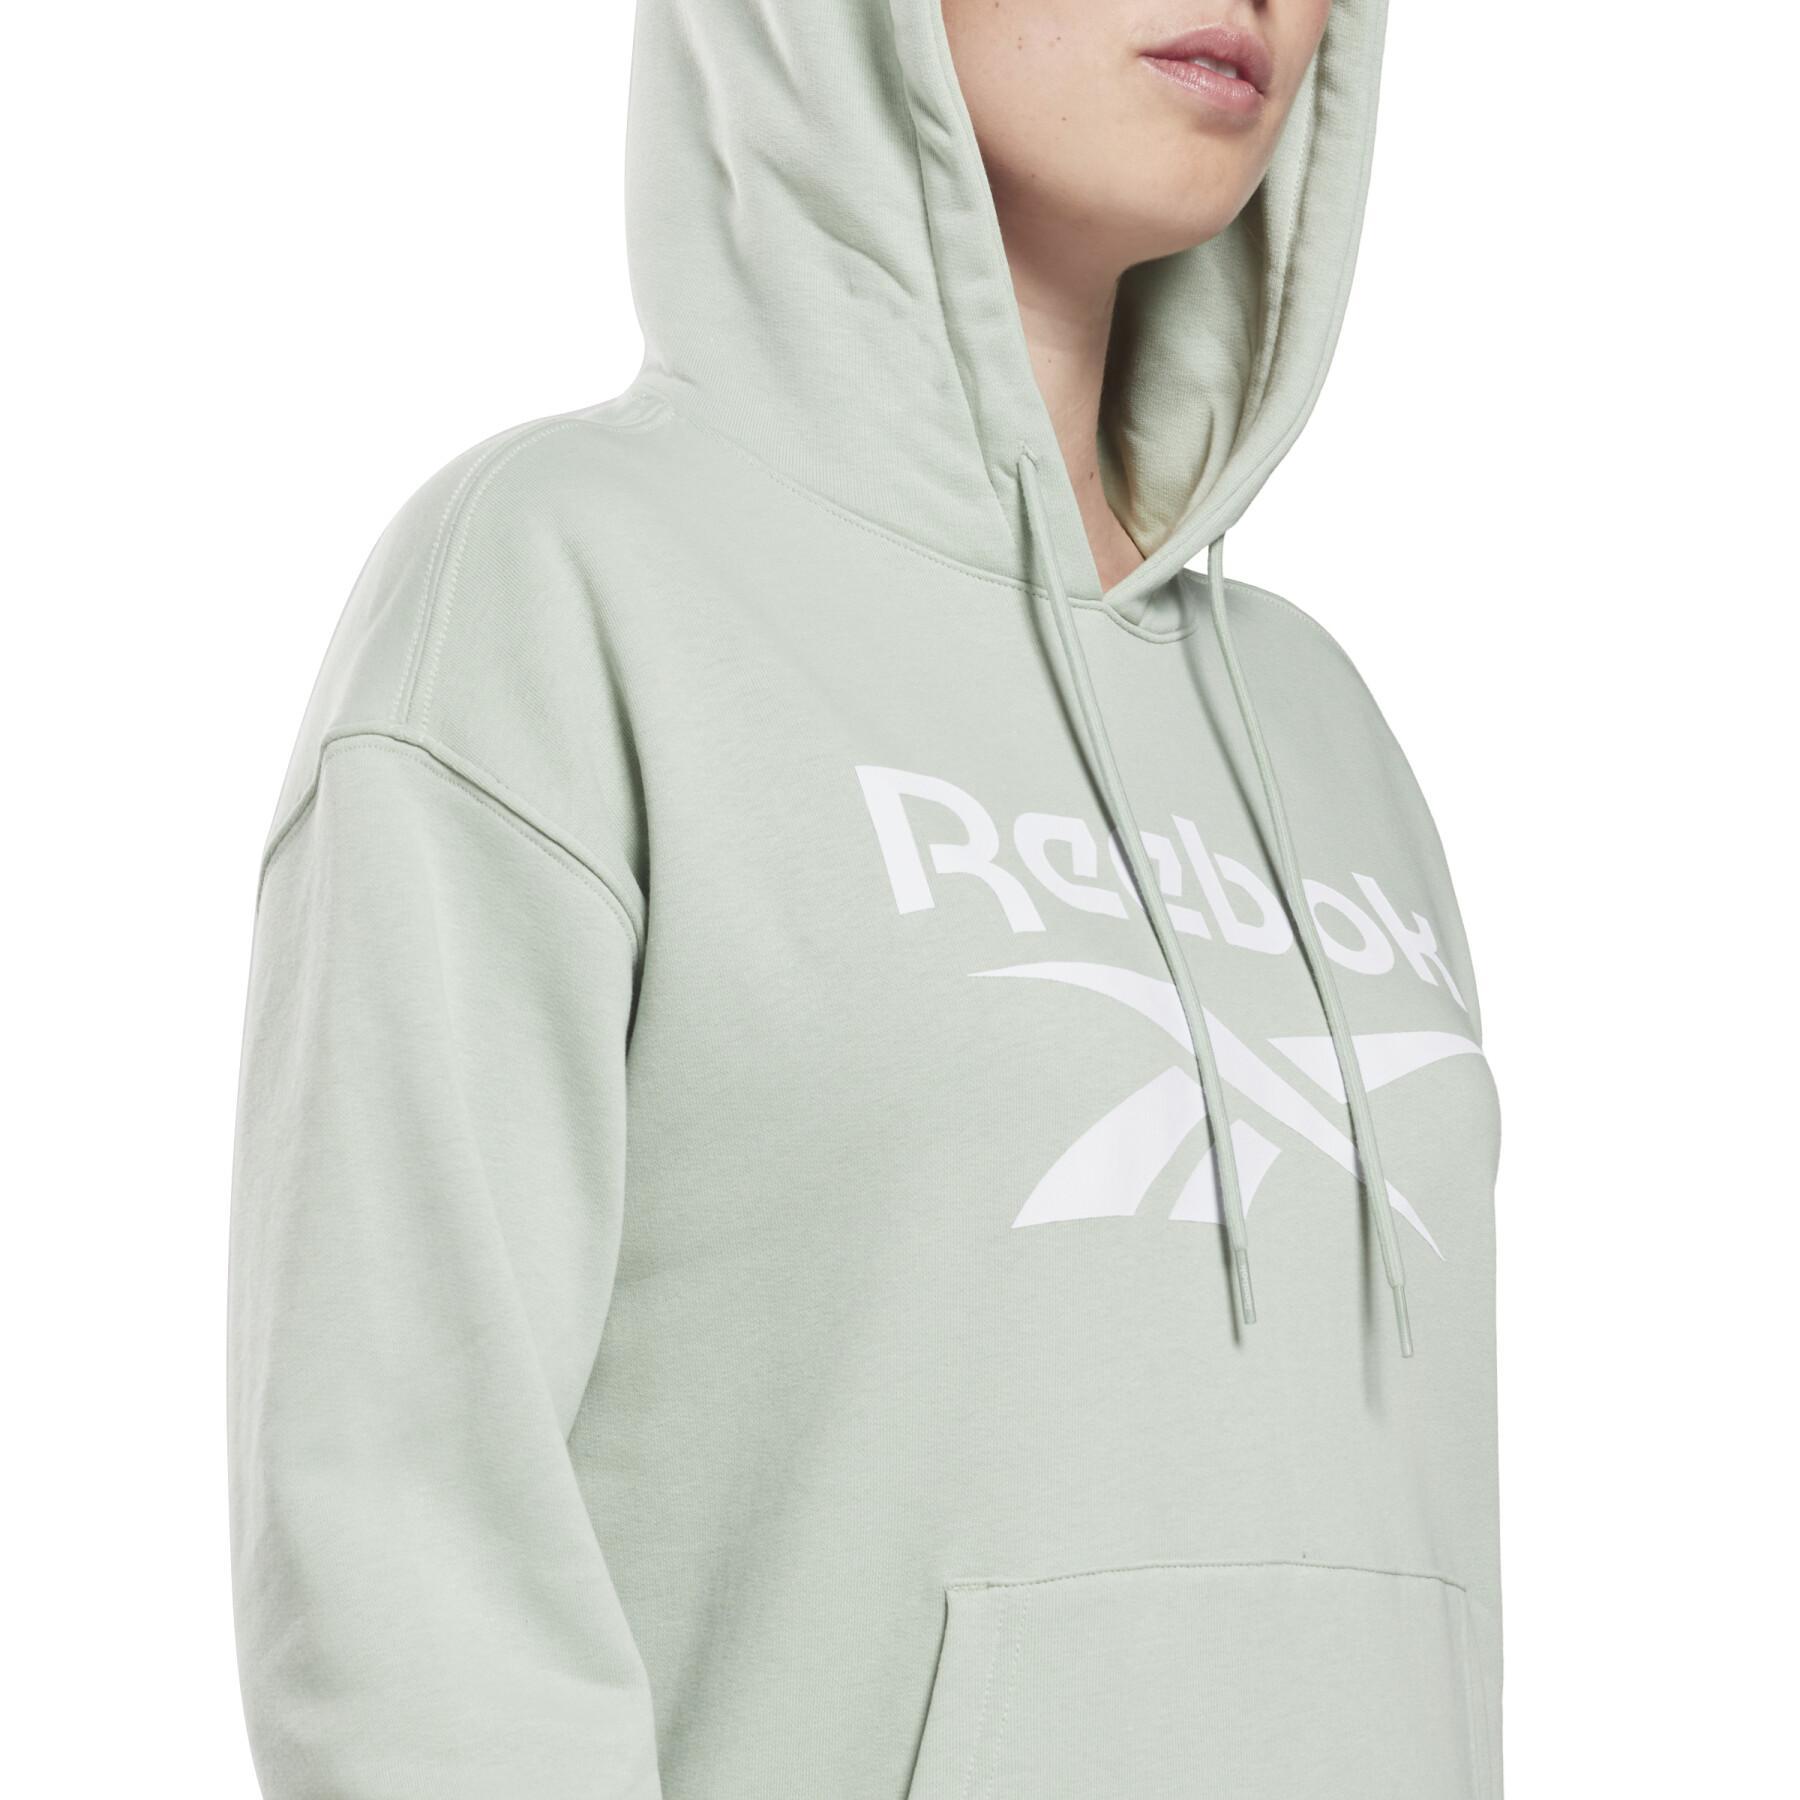 Sweatshirt à capuche femme Reebok Identity Logo French Terry